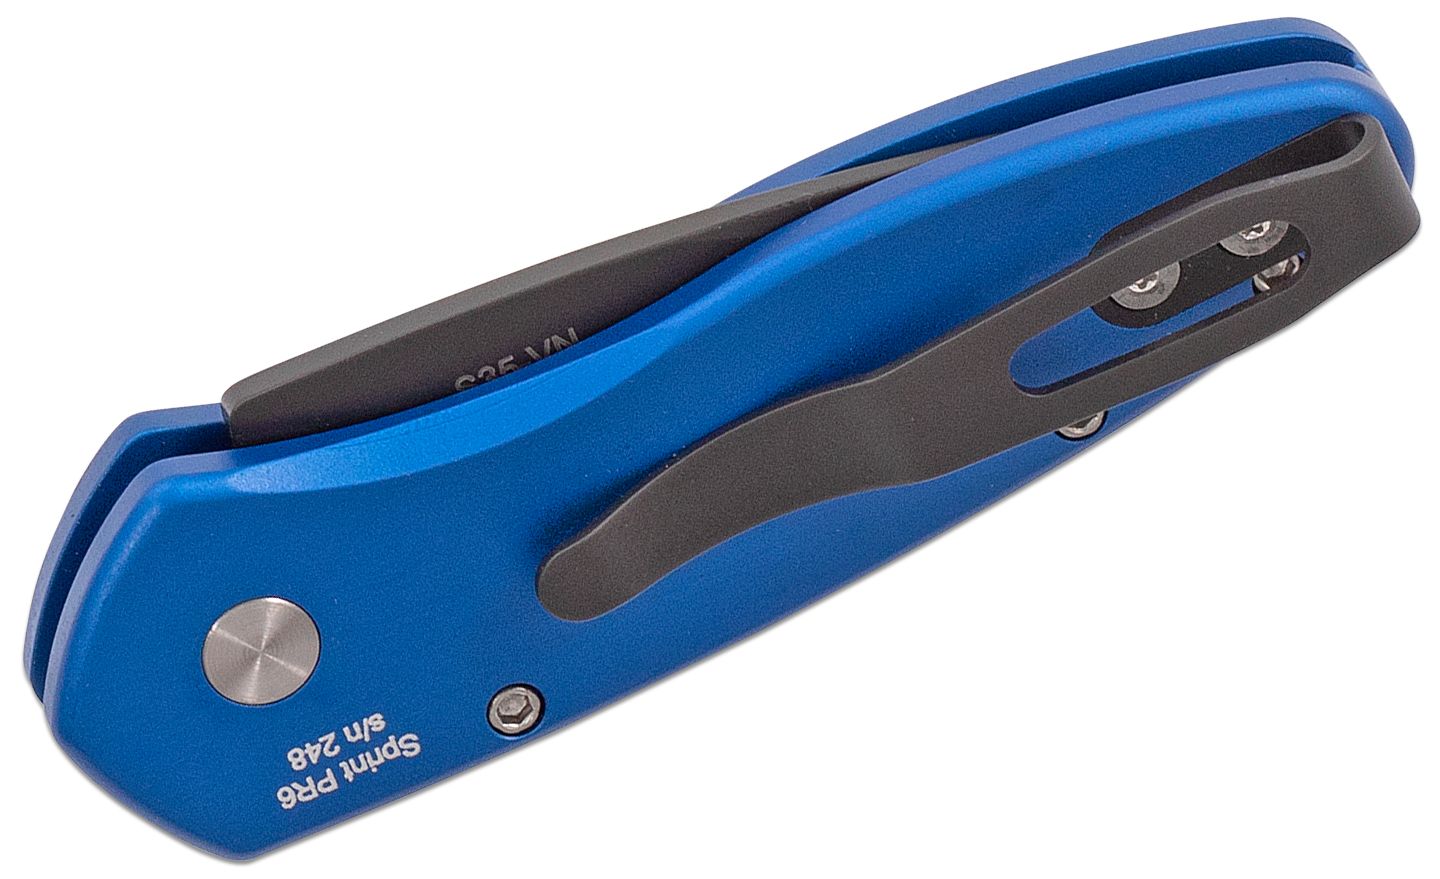 2907-BLUE Sprint AUTO Folding Knife 1.95" 154CM Black DLC Plain Blade, Blue Aluminum Handles